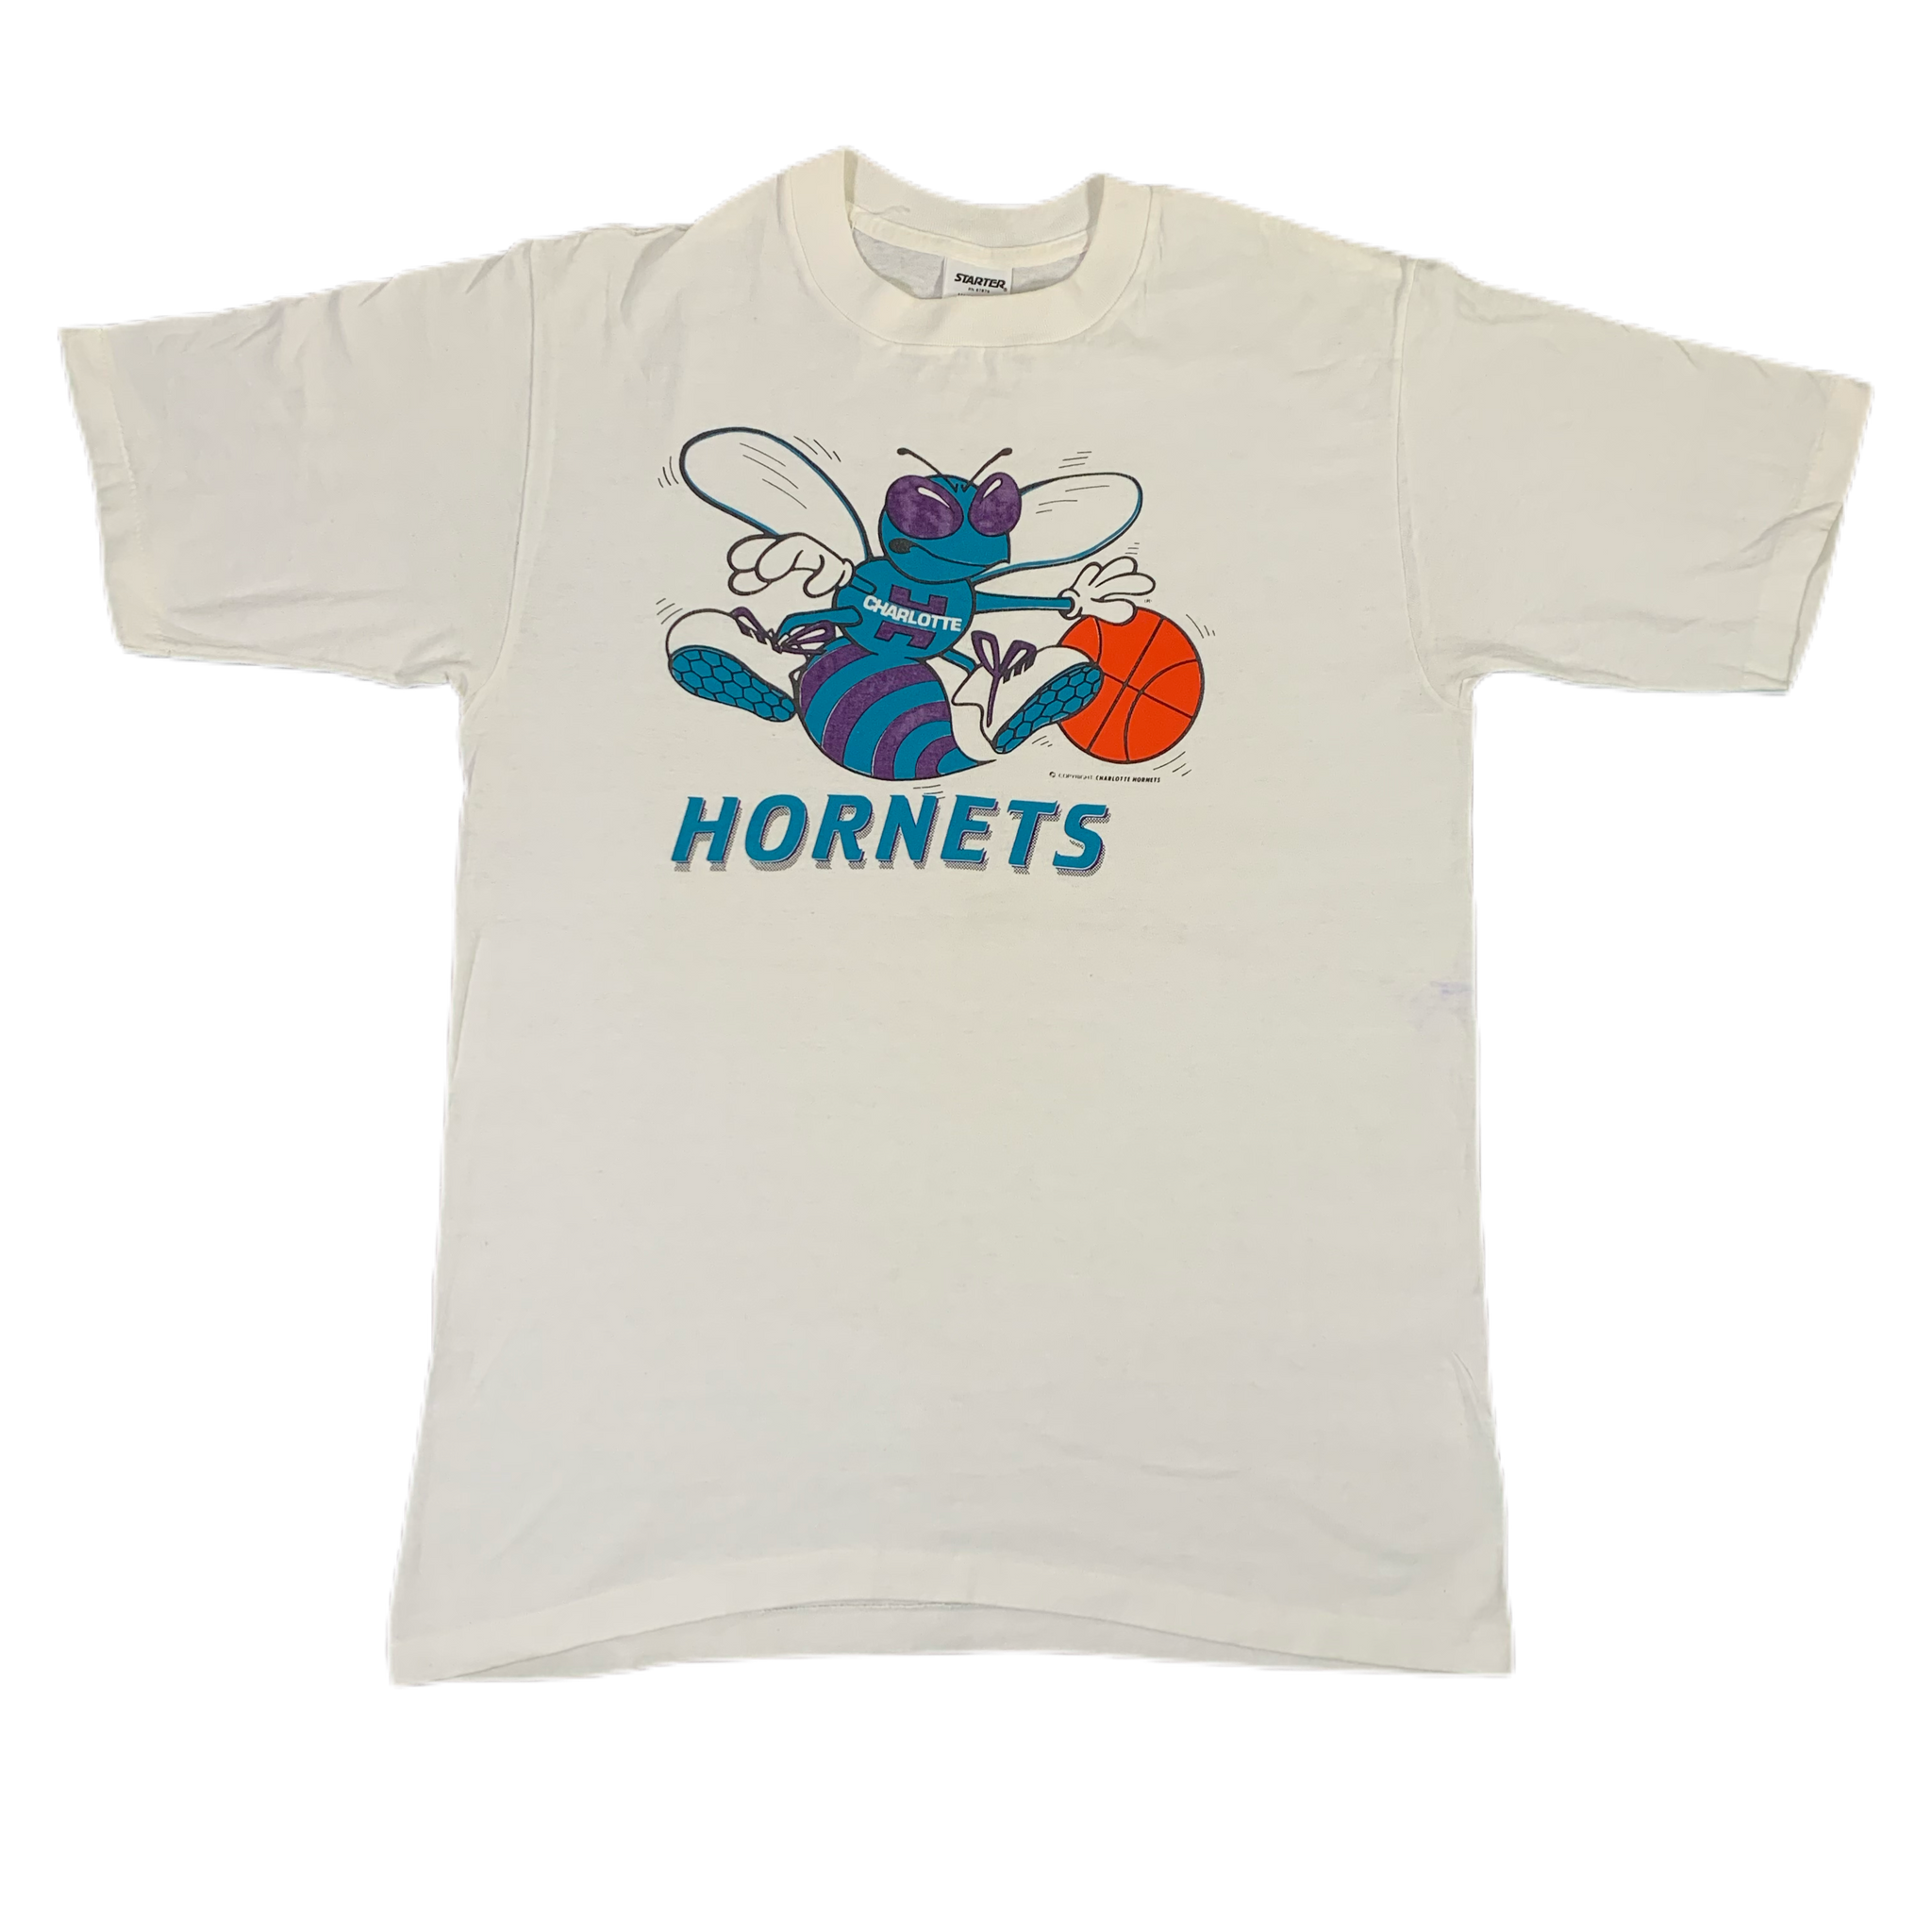 Vintage Charlotte Hornets NBA Basketball Single Stitch T-Shirt 